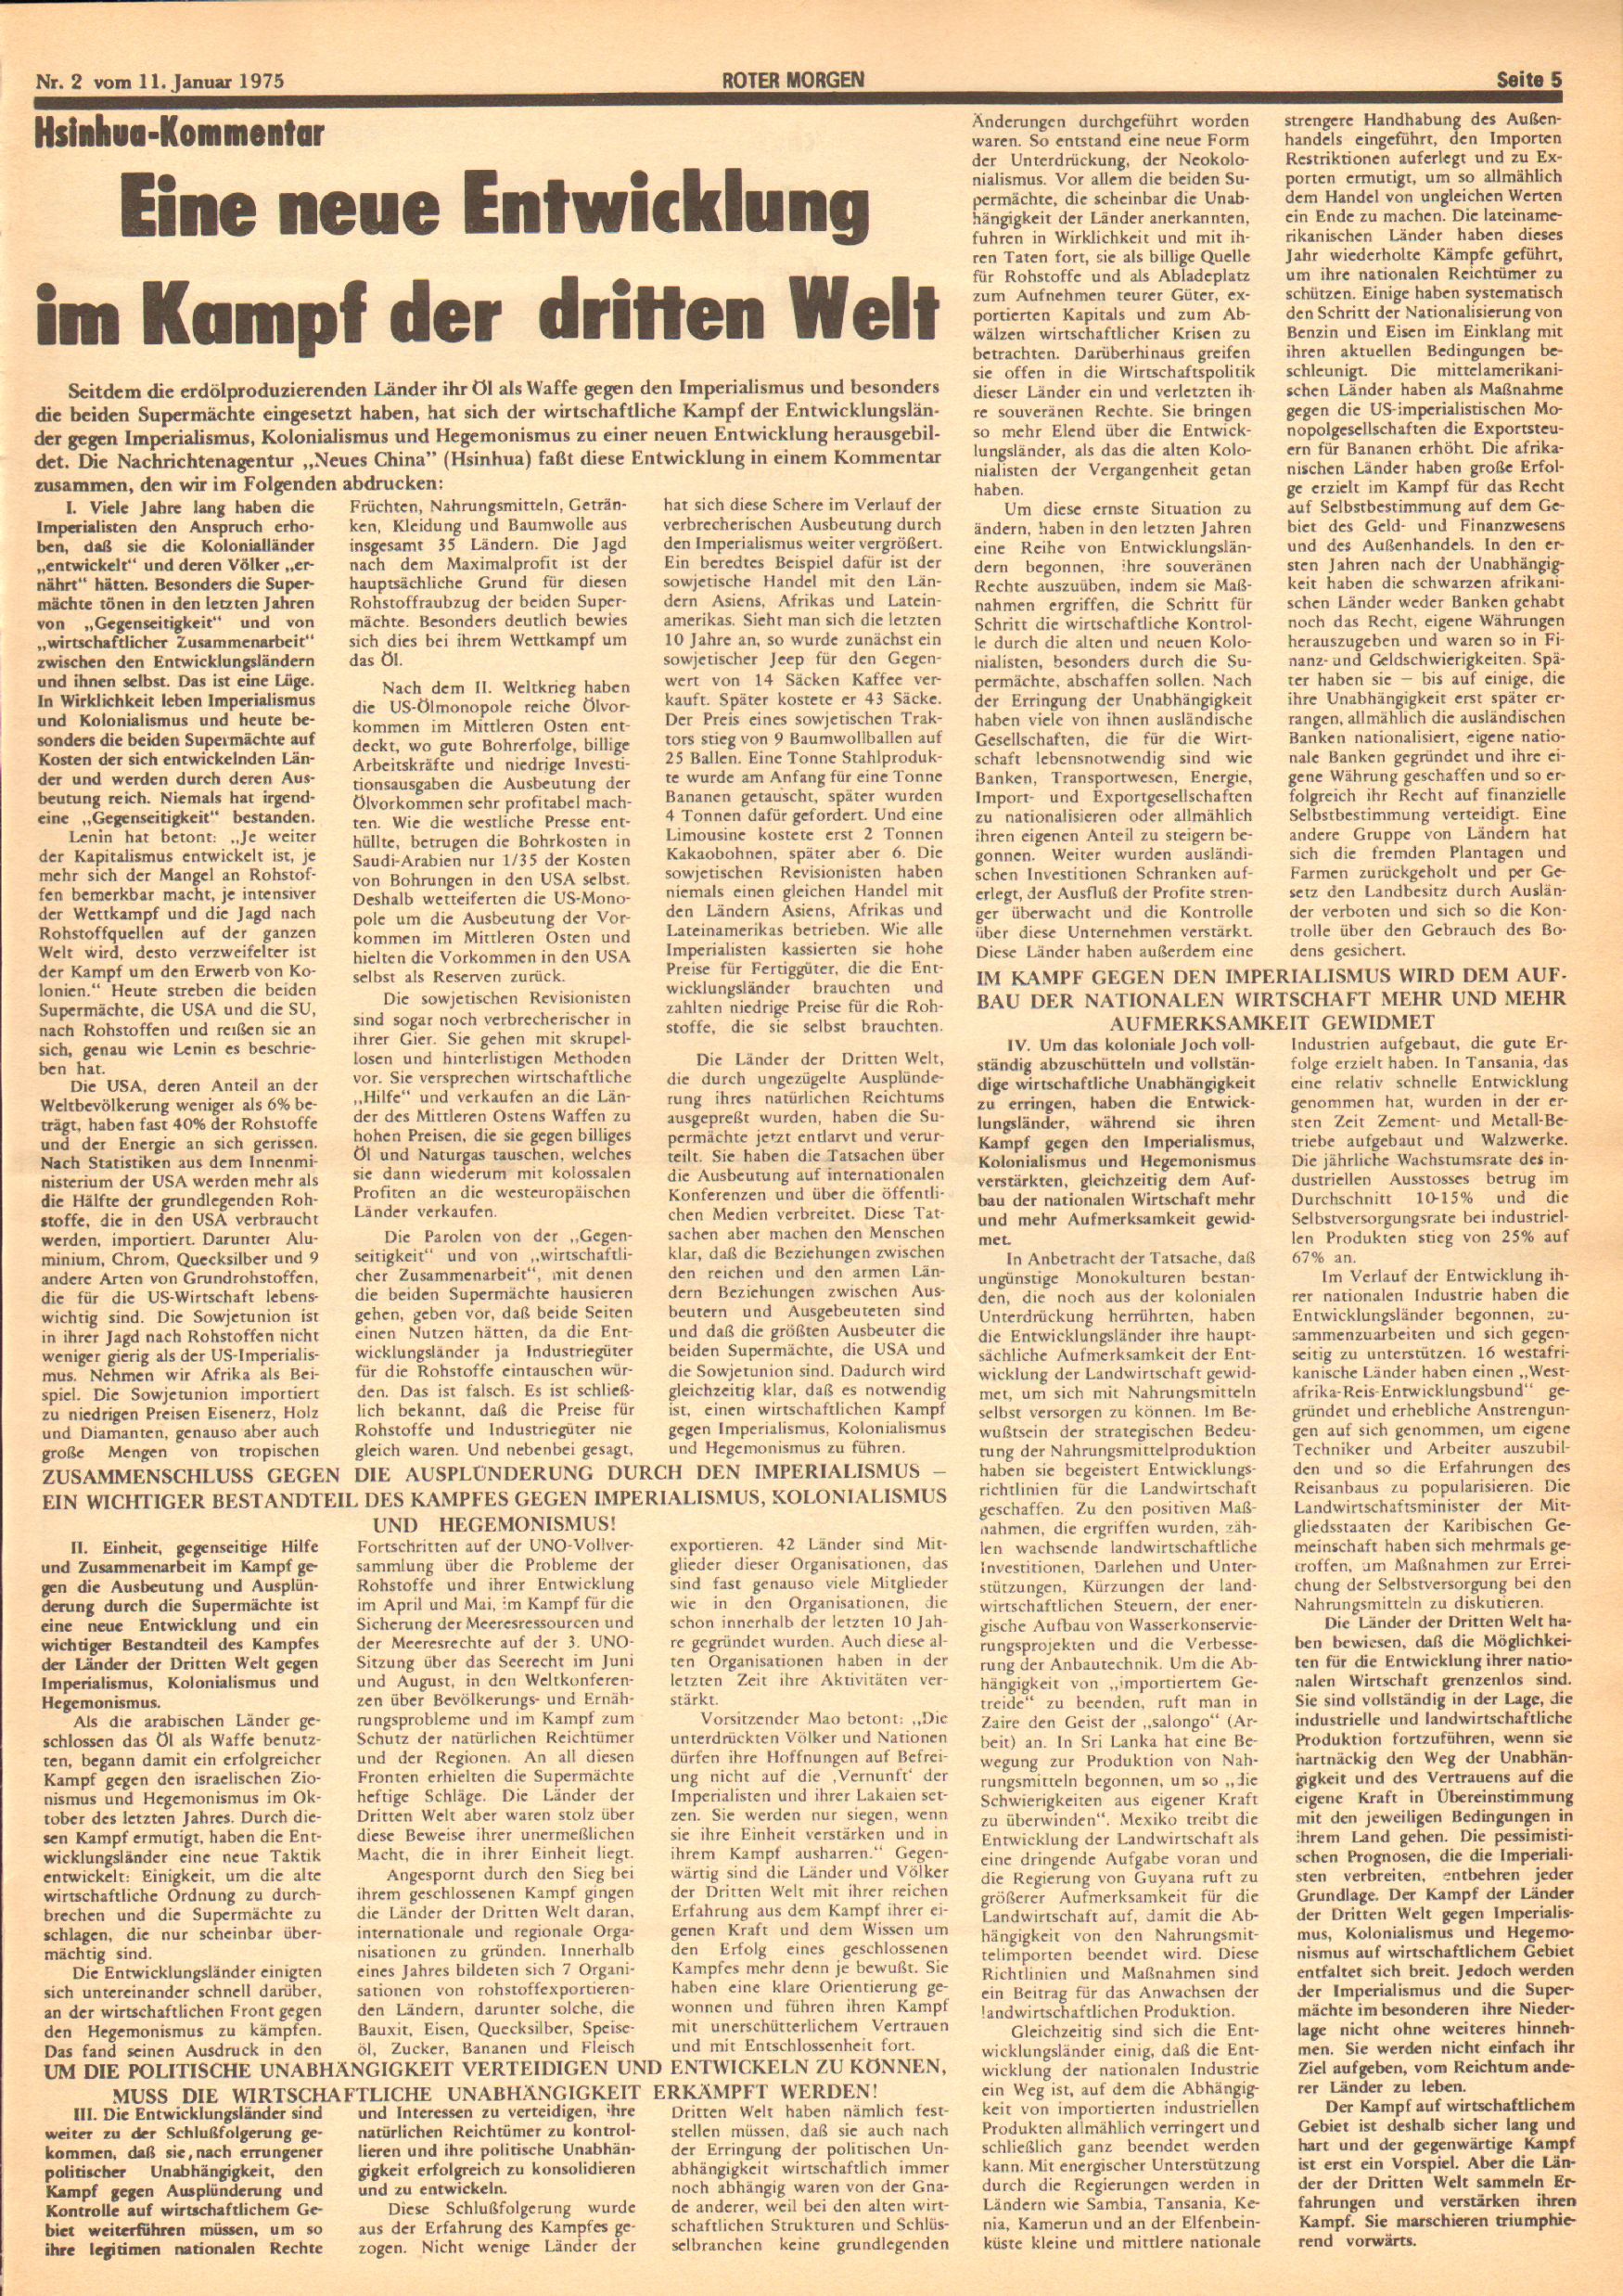 Roter Morgen, 9. Jg., 11. Januar 1975, Nr. 2, Seite 5